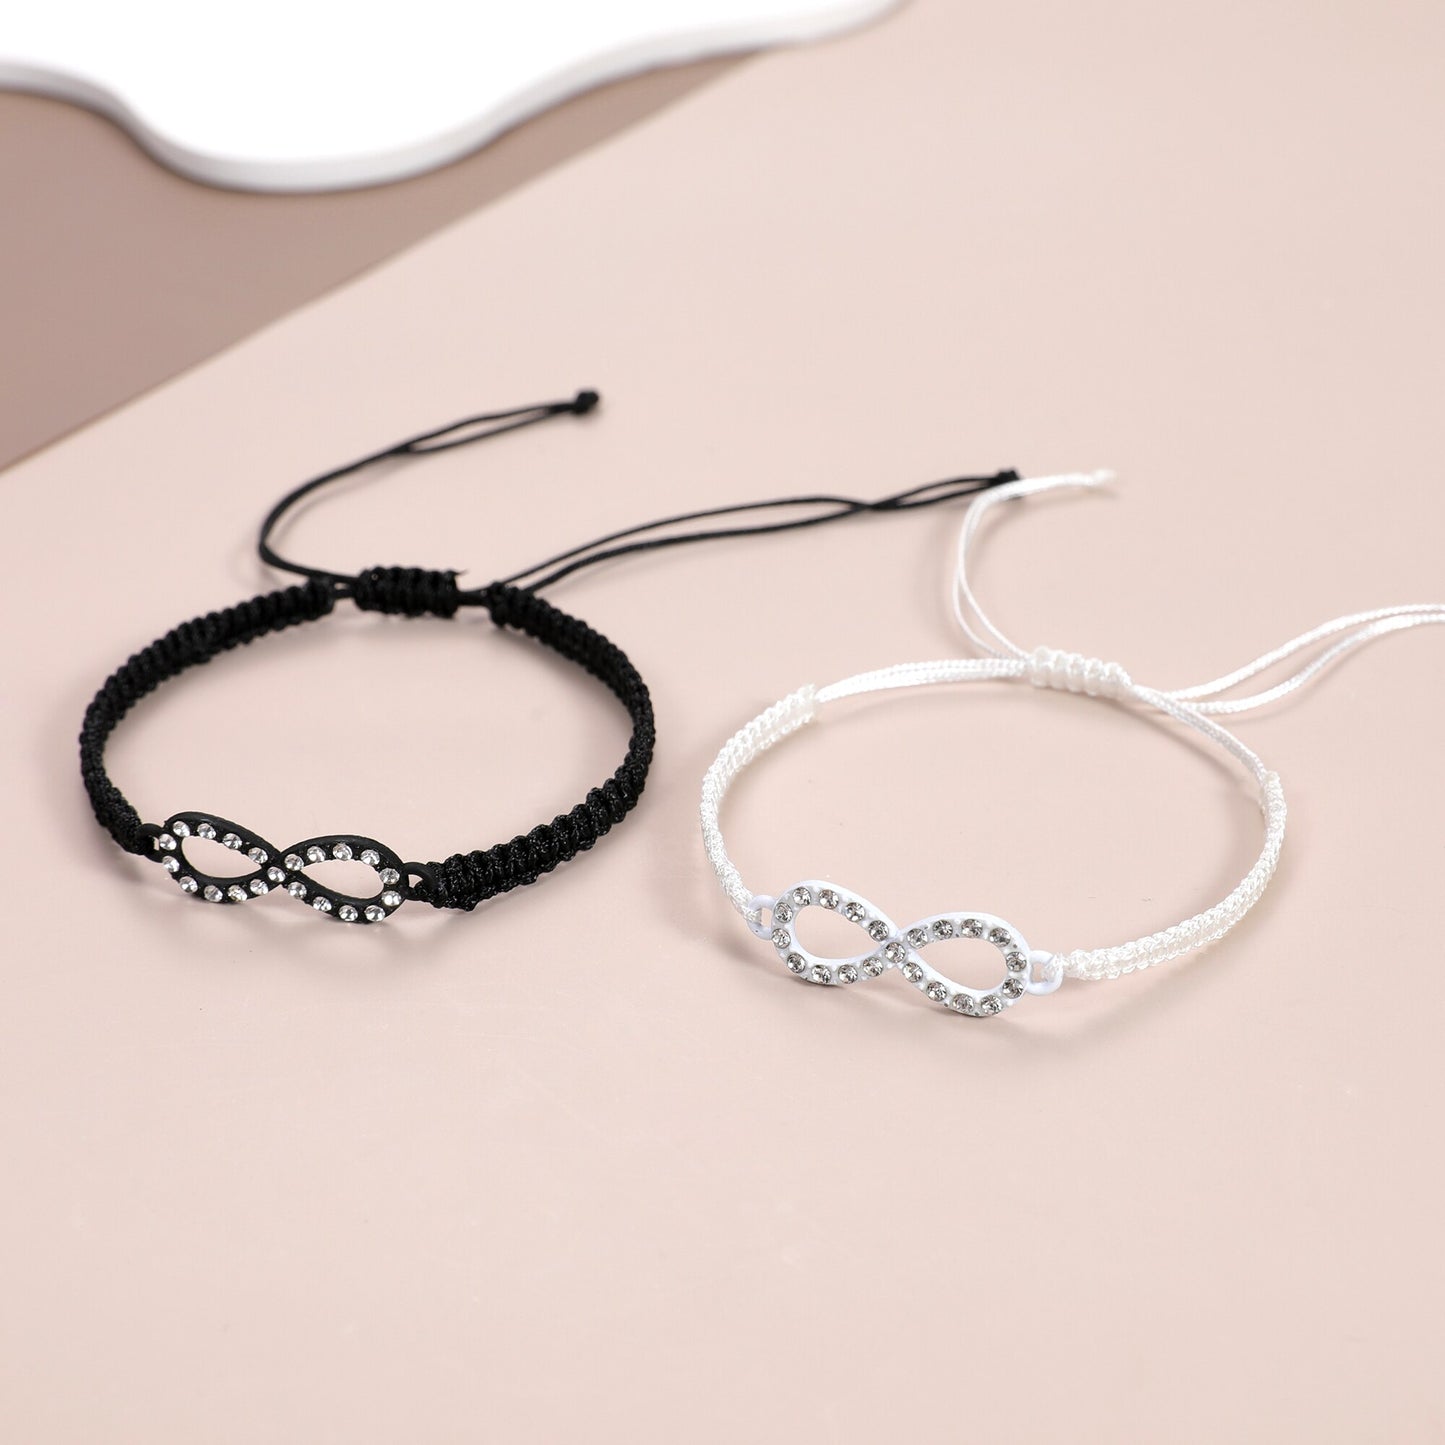 12pcs/set Together Forever Love Infinity Bracelet for Lovers White/black String Couple Bracelets Women Men's Wish Jewelry Gift